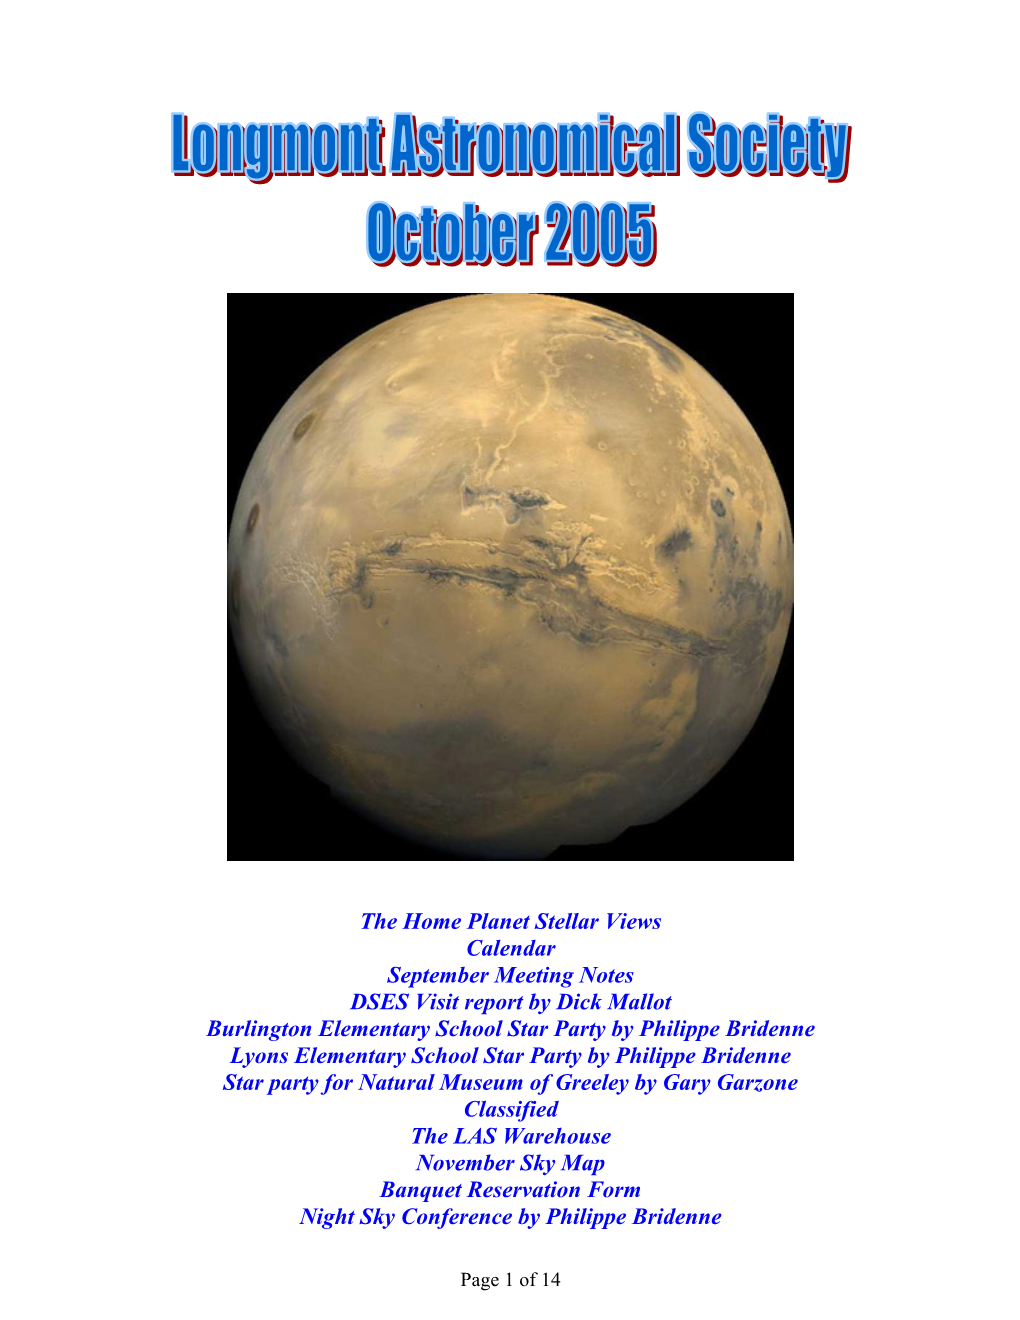 The Home Planet Stellar Views Calendar September Meeting Notes DSES Visit Report by Dick Mallot Burlington Elementary School St